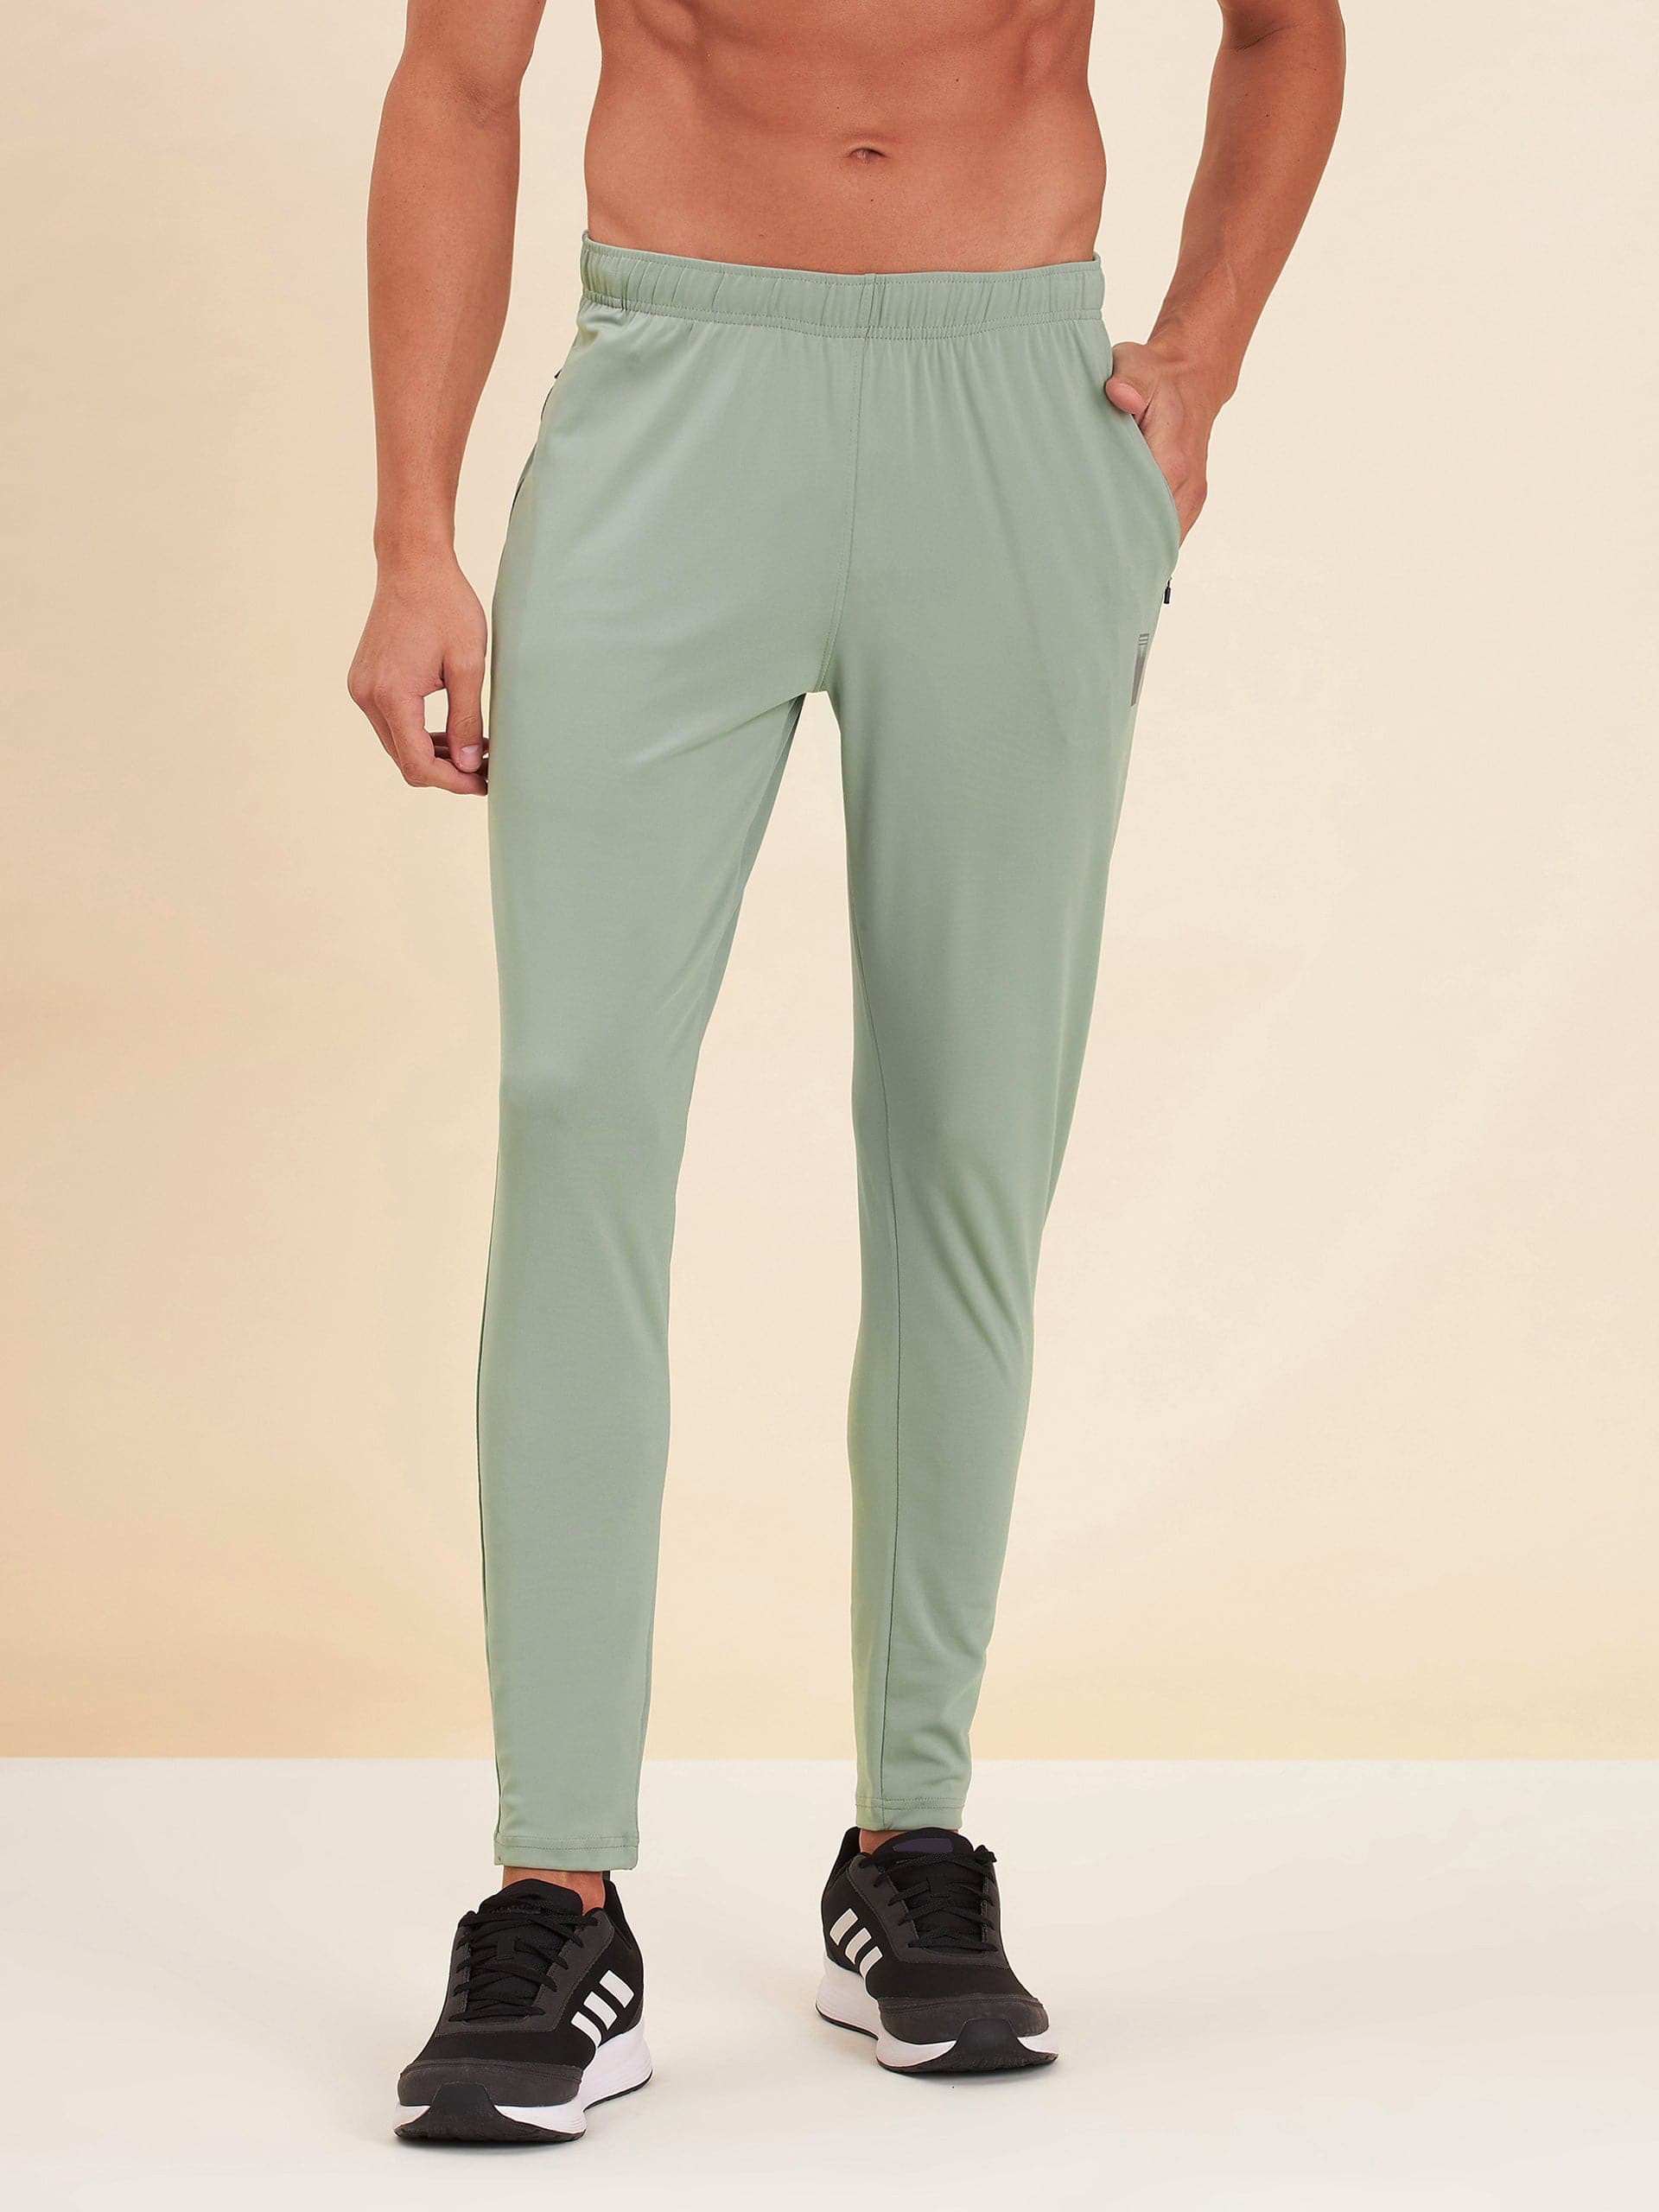 Men's Olive Dry Fit Stretchable Slim Track Pants - LYUSH-MASCLN